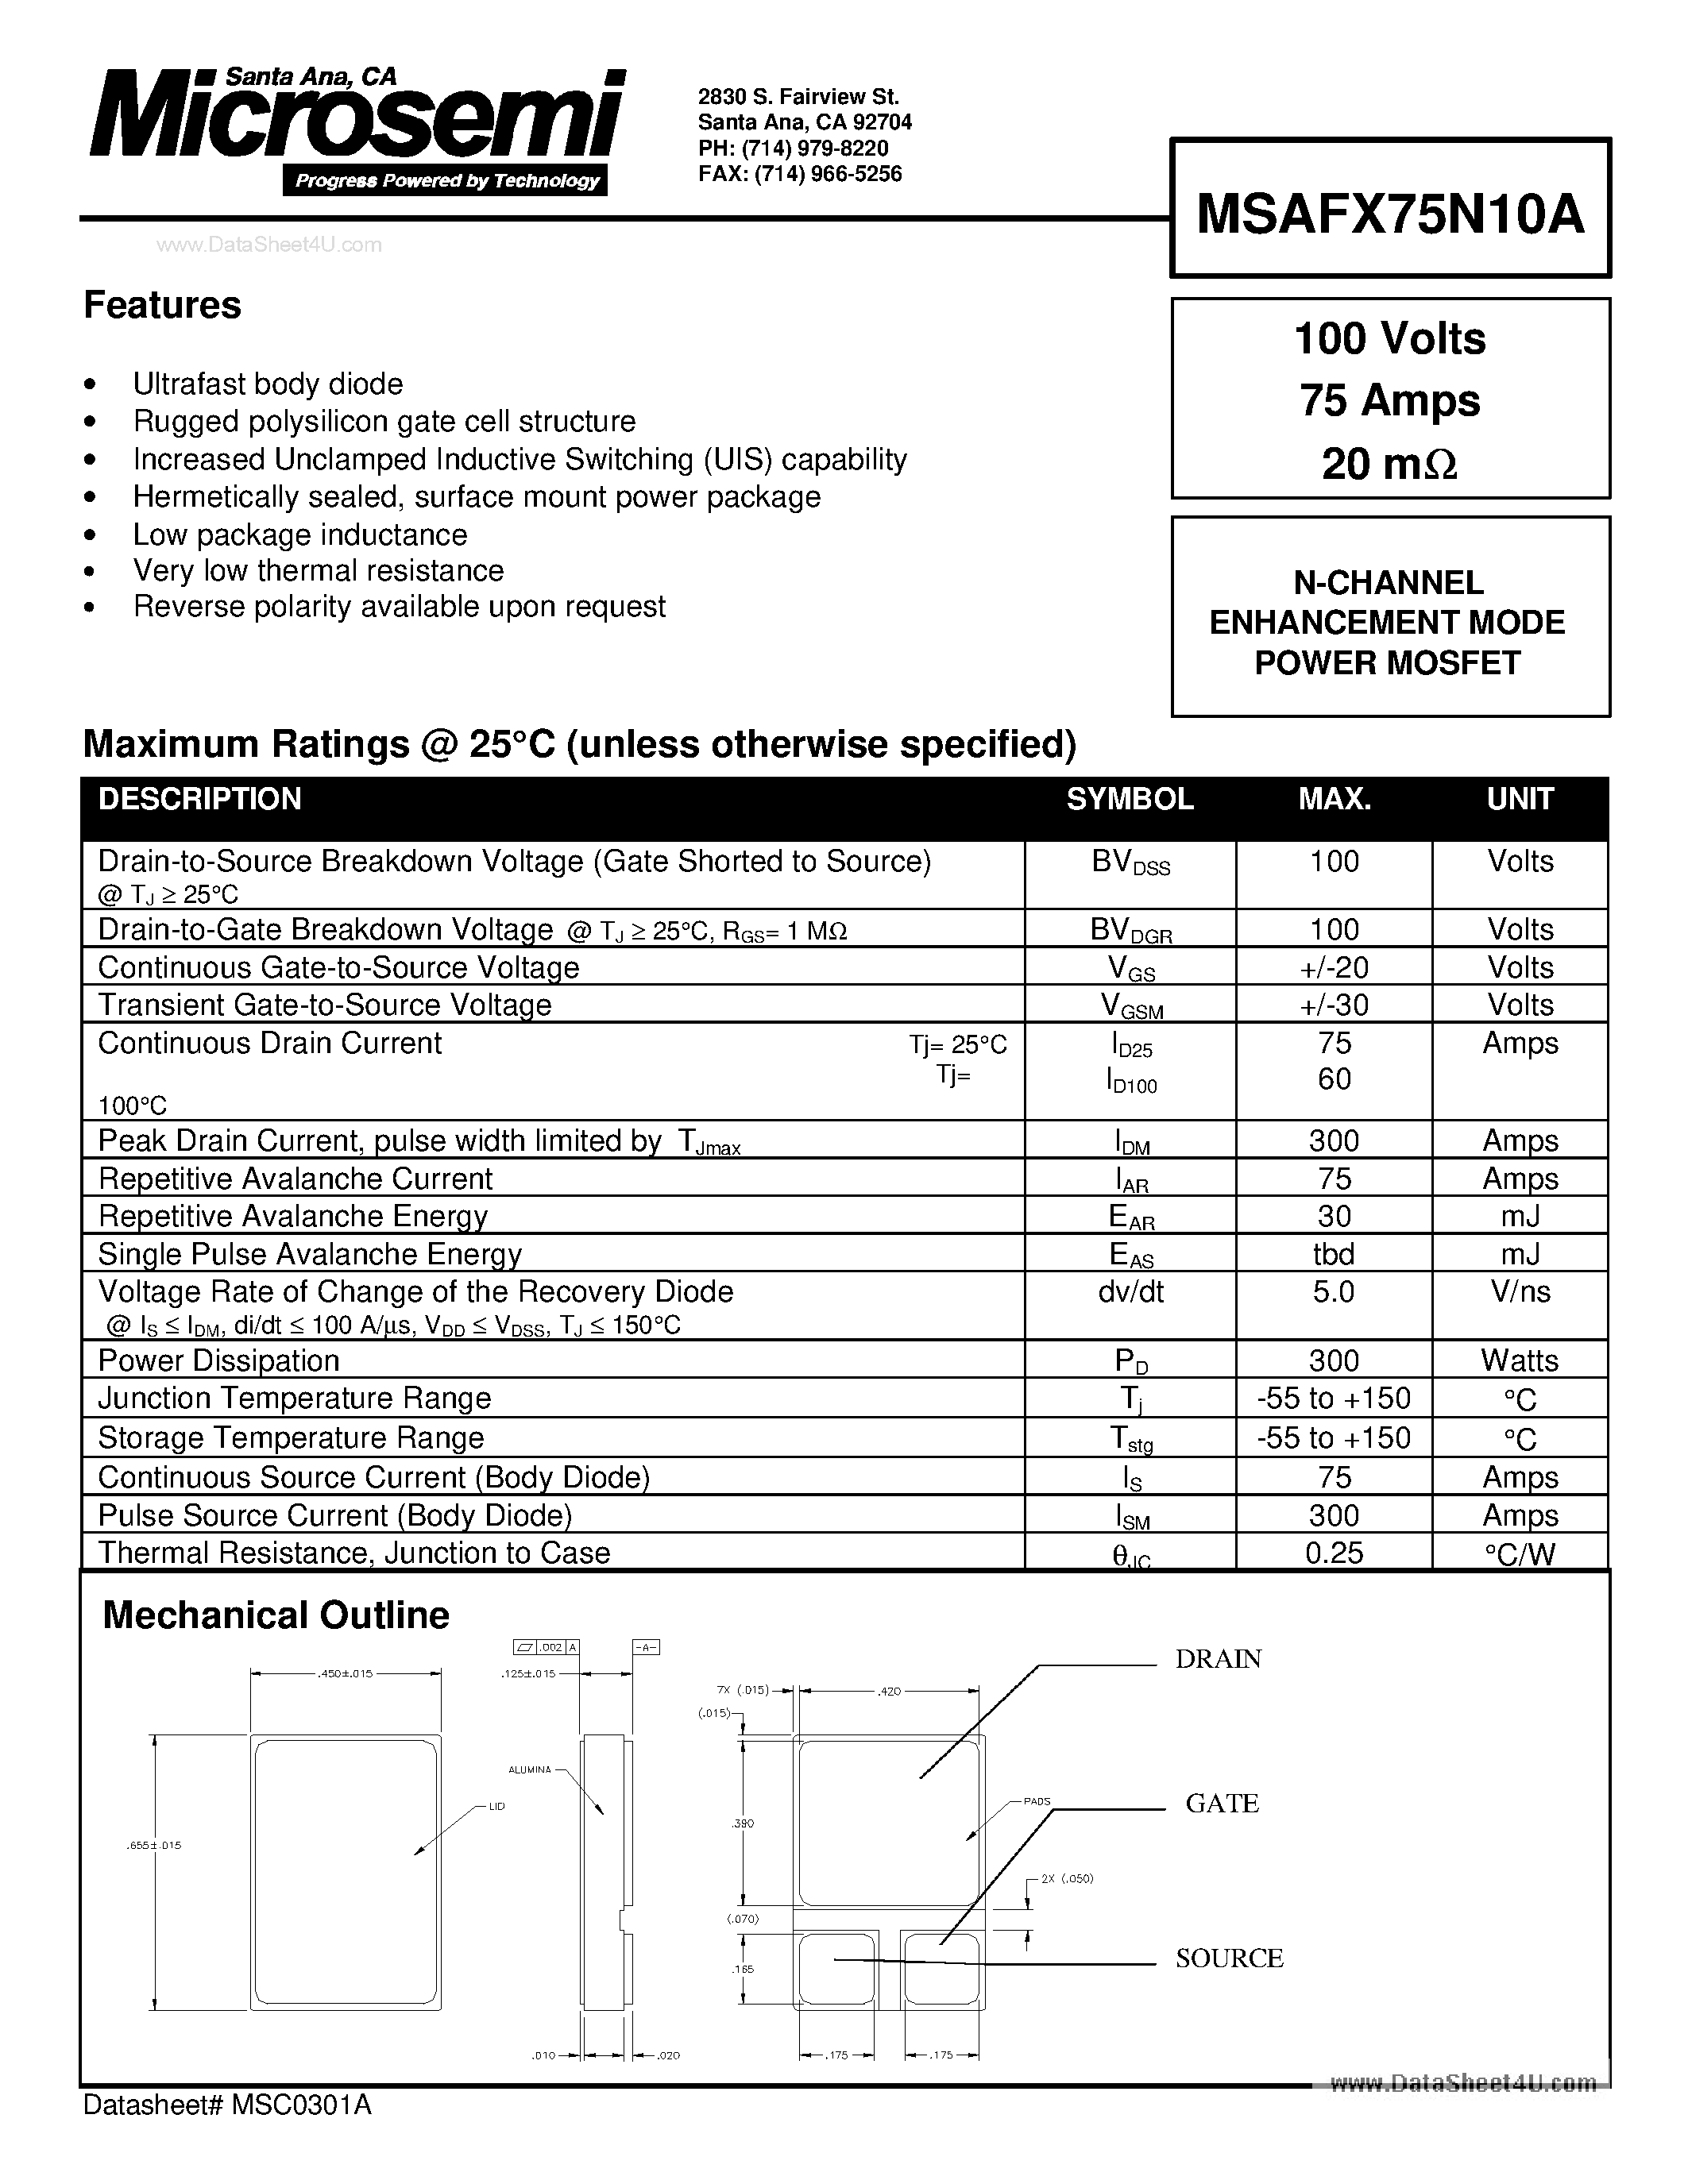 Даташит MSAFX75N10A - N-CHANNEL ENHANCEMENT MODE POWER MOSFET страница 1